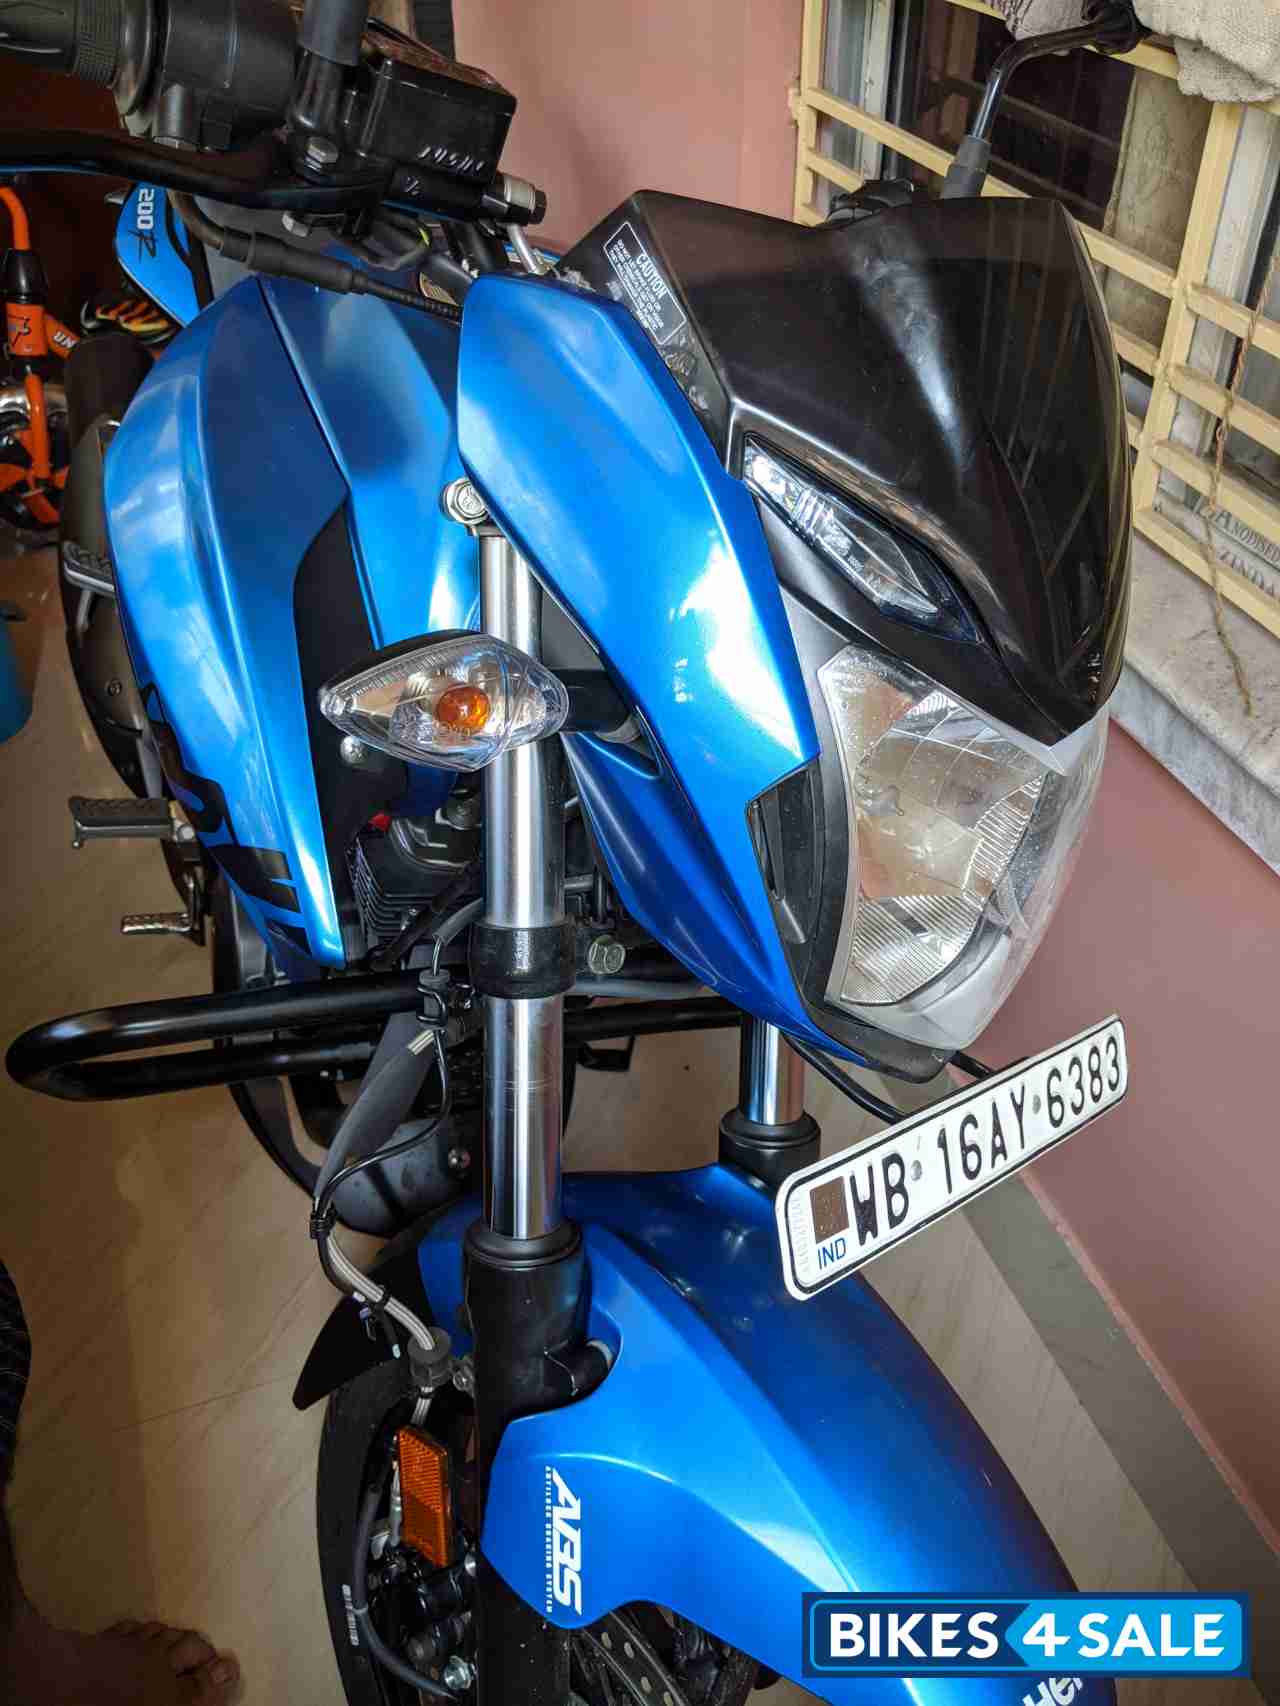 Blue Hero Xtreme 200R